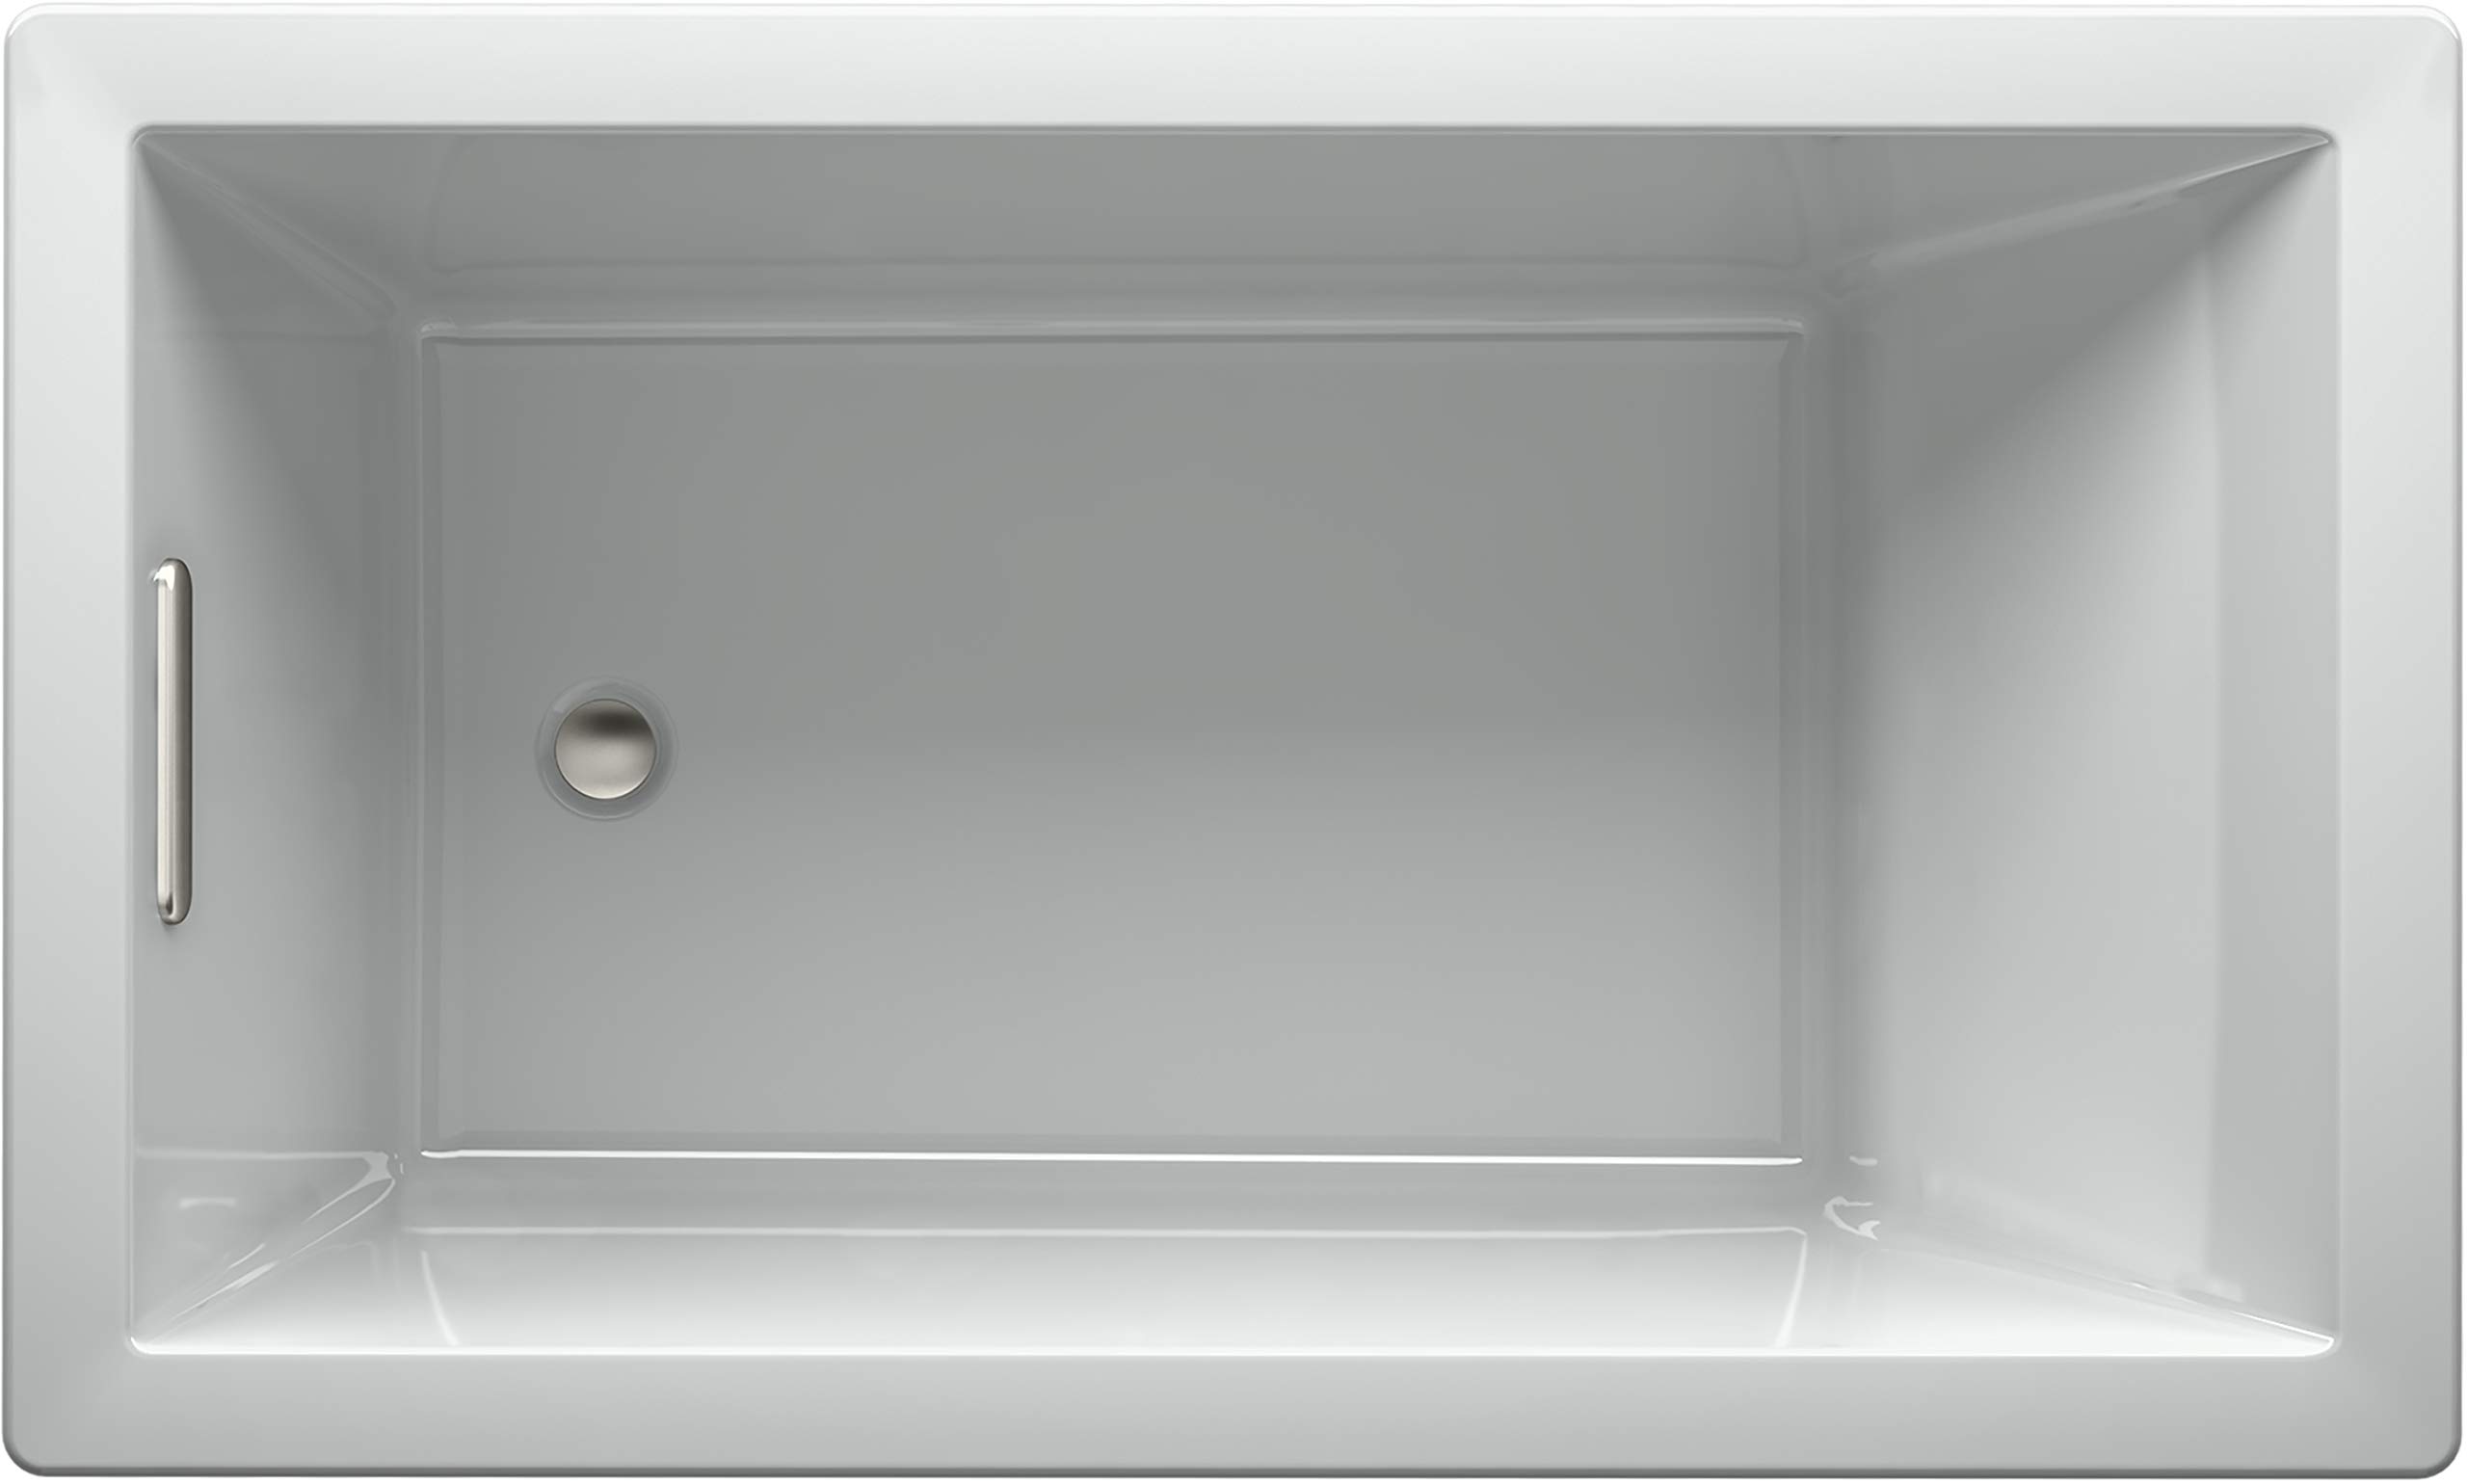 Kohler K-7272-BN Clearflo Slotted Overflow Bath Drain, Vibrant Brushed Nickel, 4.5 pounds